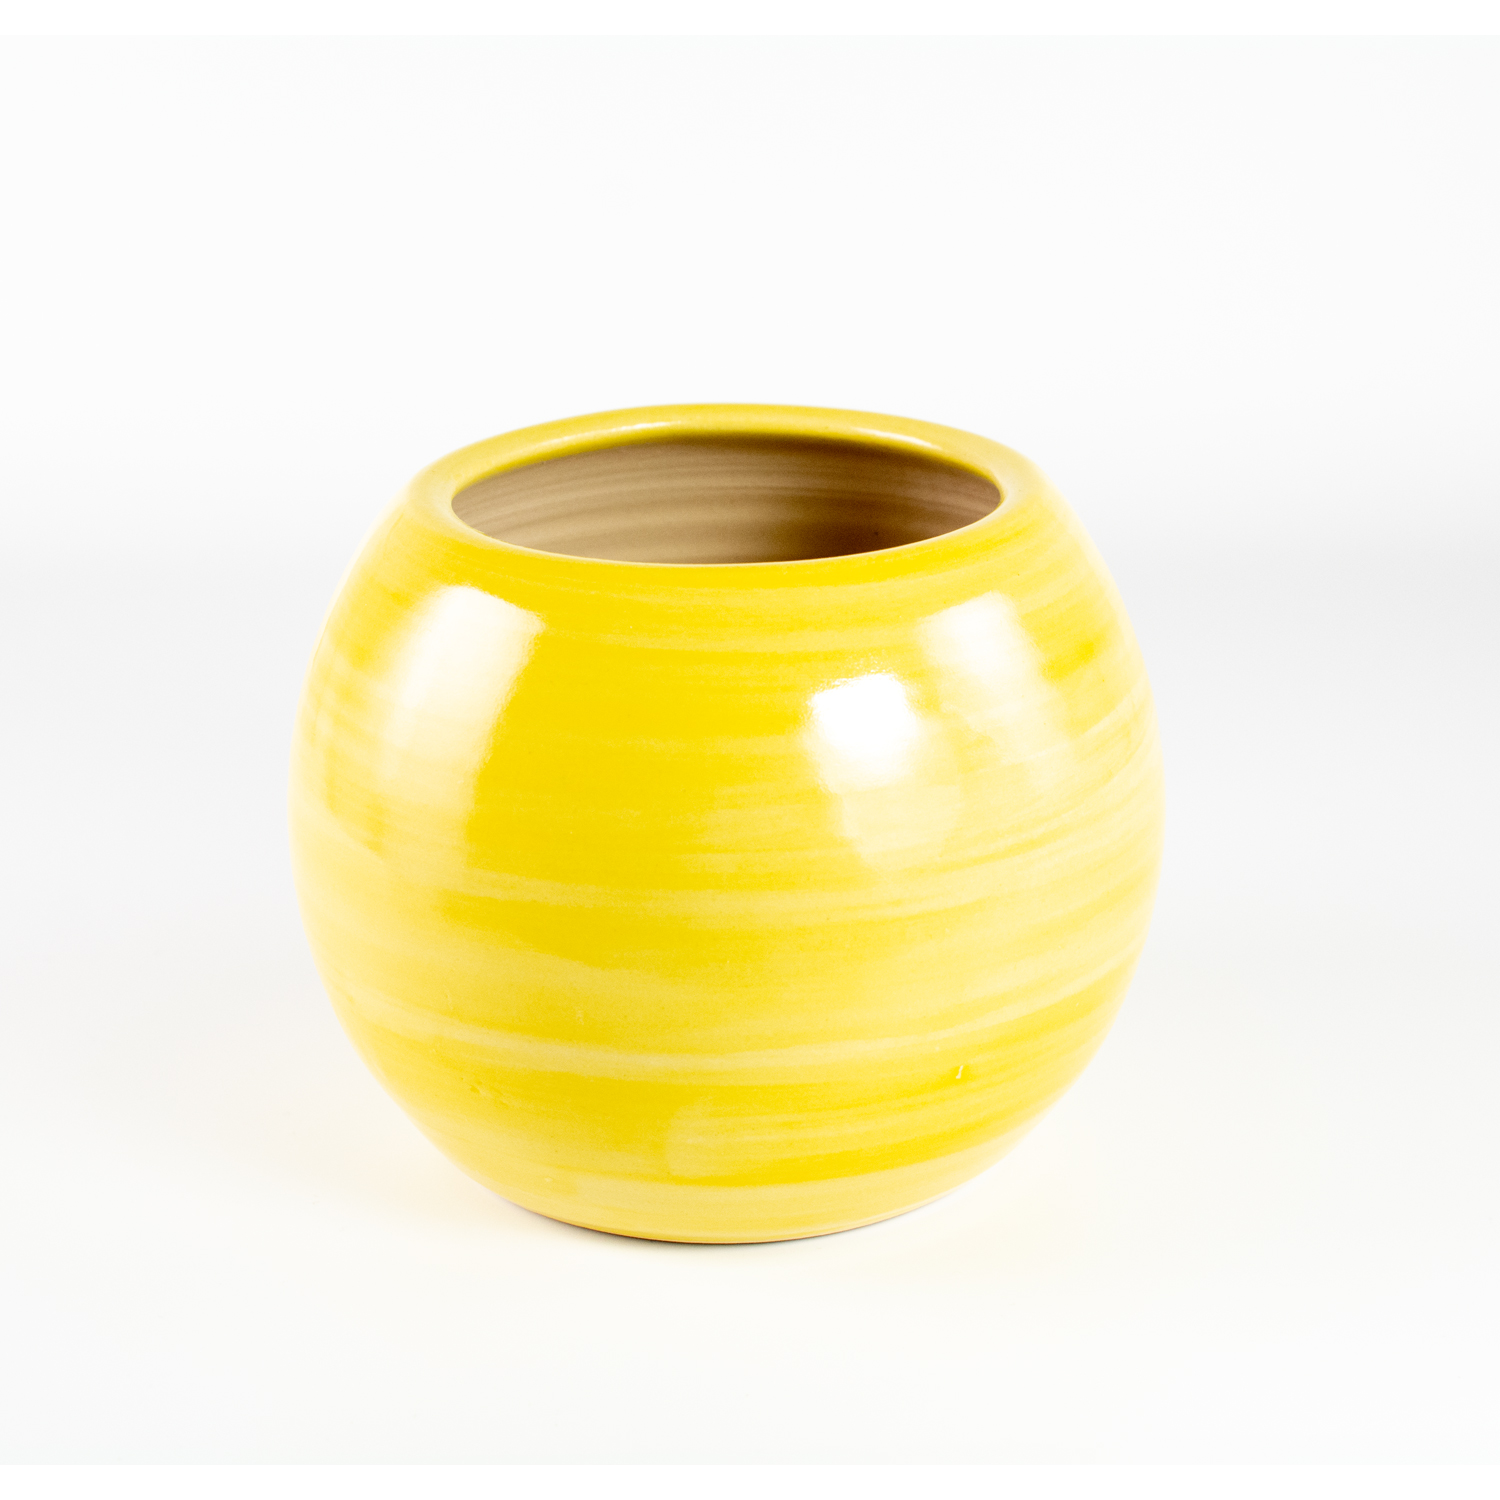 Kugelvase aus Keramik, gelb